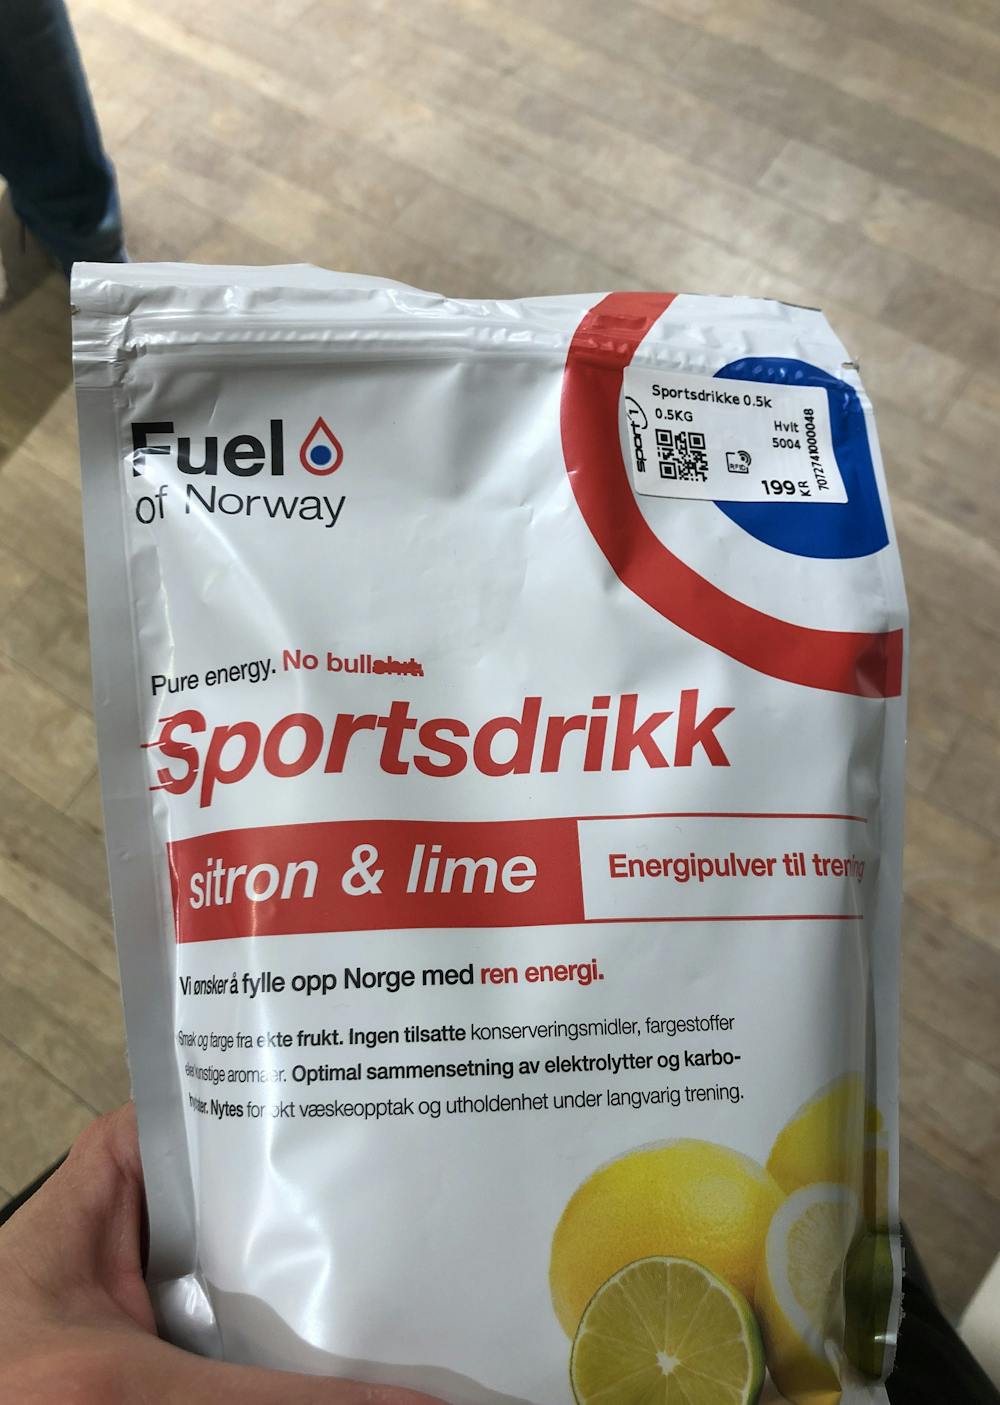 Sportsdrikk , Fuel of Norway